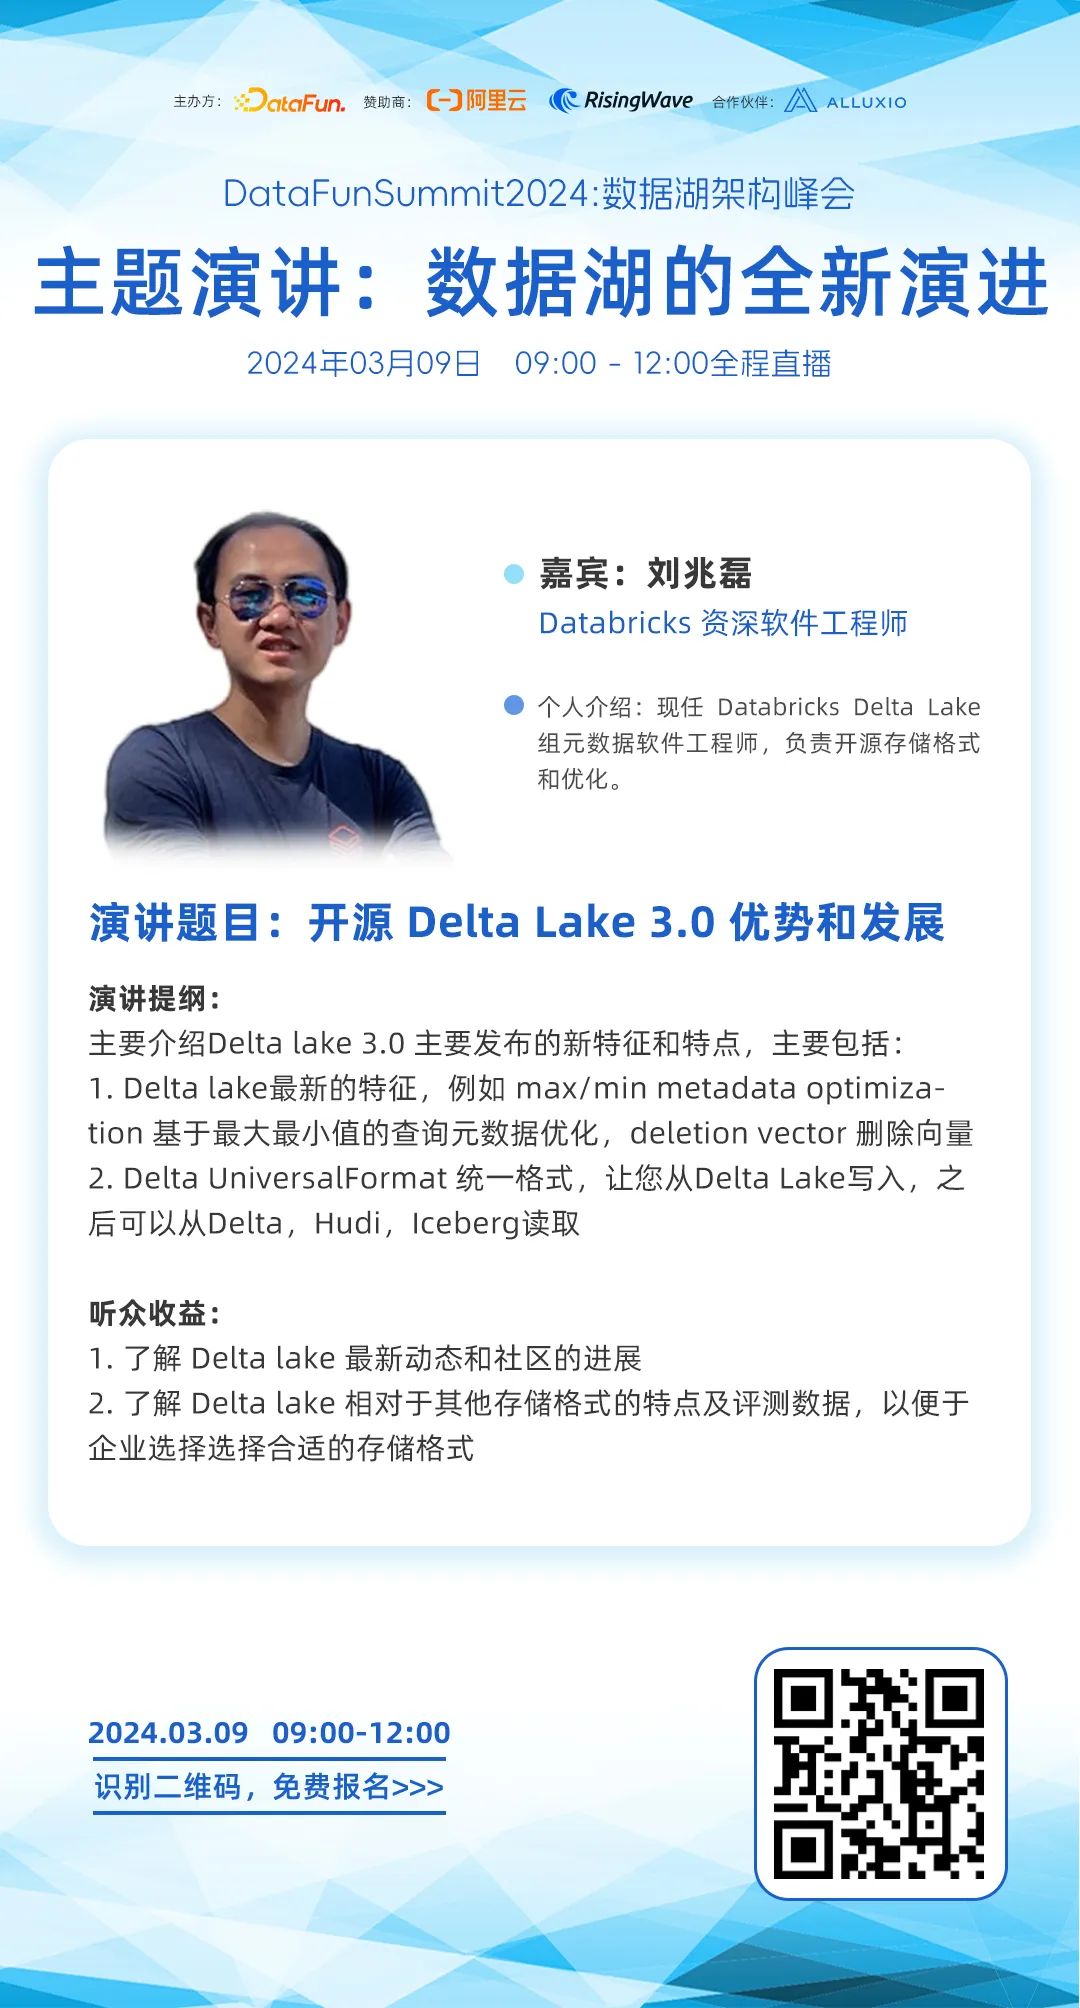 Databricks关于Delta Lake 3.0的优势与发展解读